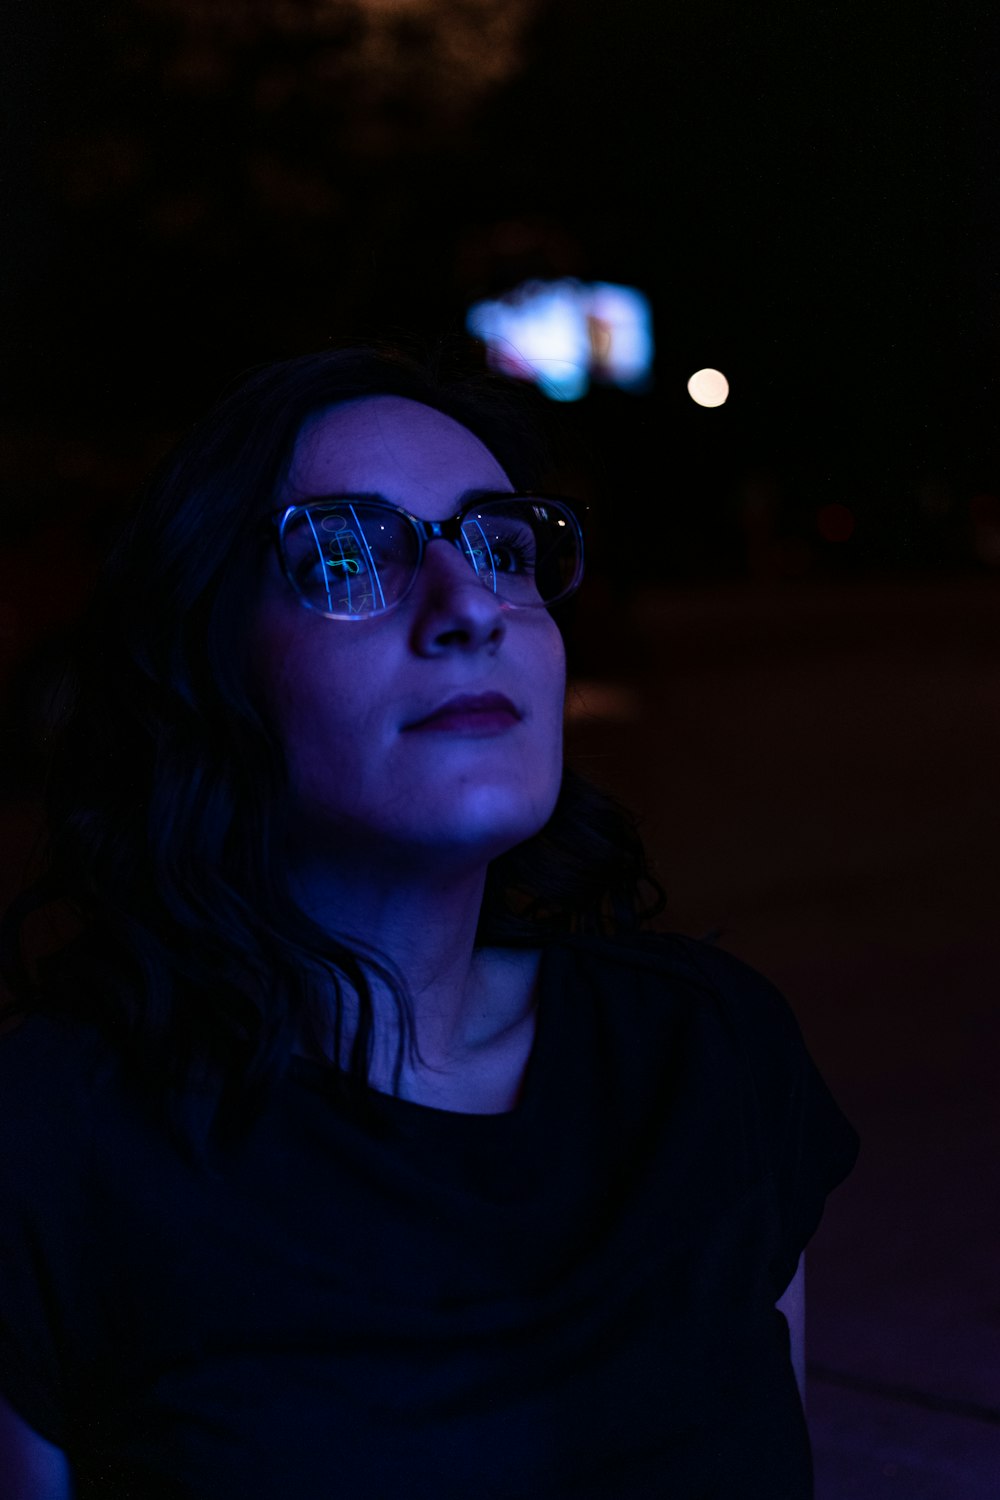 woman wearing eyeglasses close-up photography